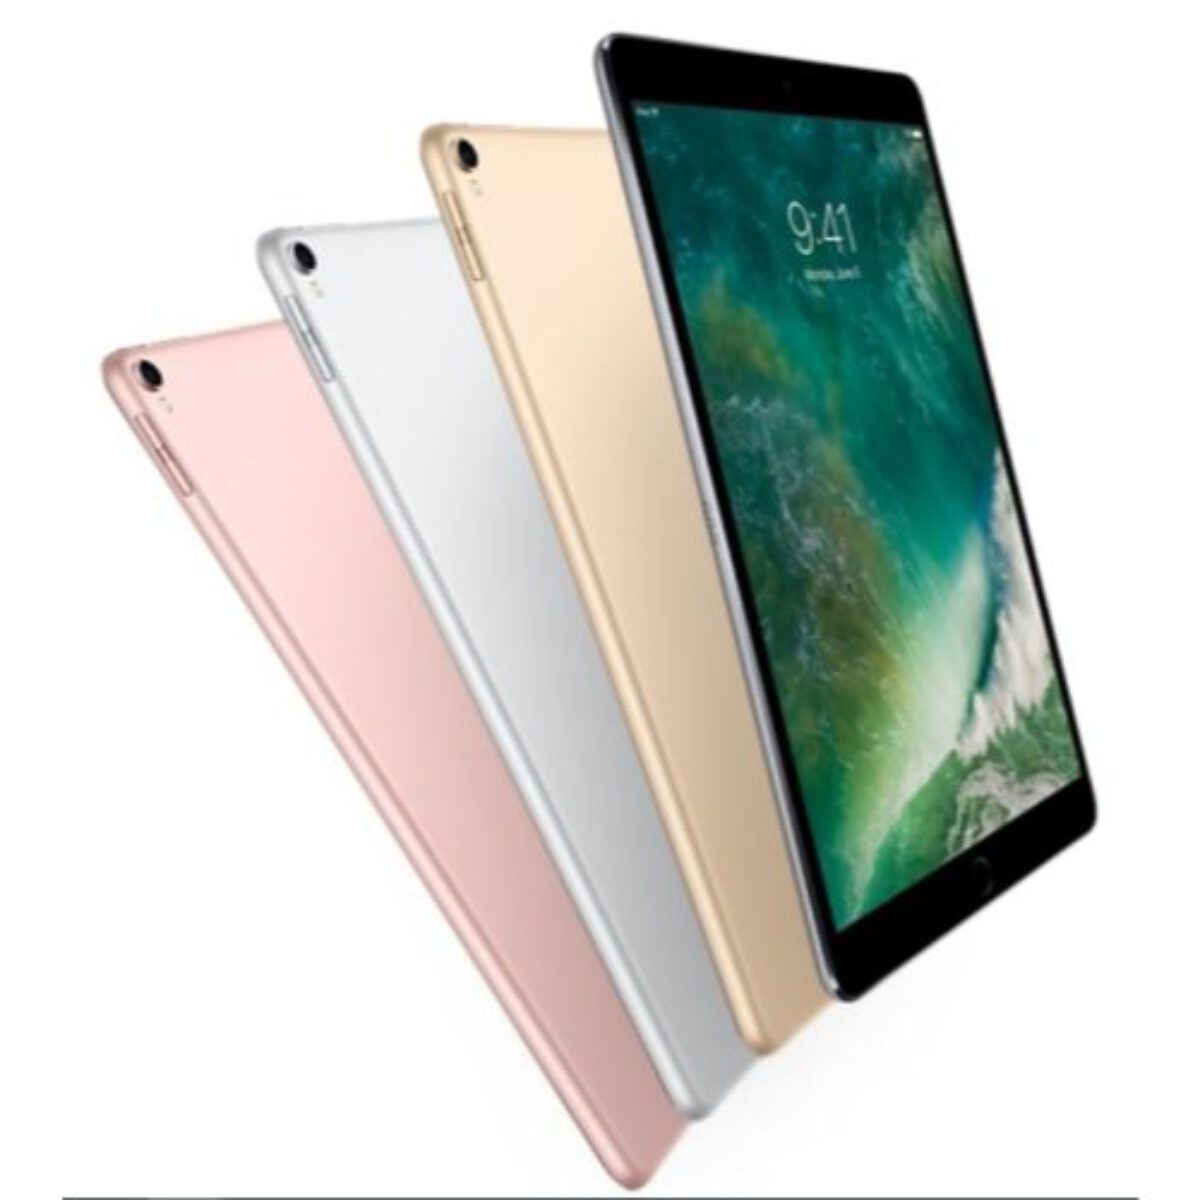 Apple iPad Pro 10.5 Inch Wi-Fi 512GB - Best Reviews Tablet